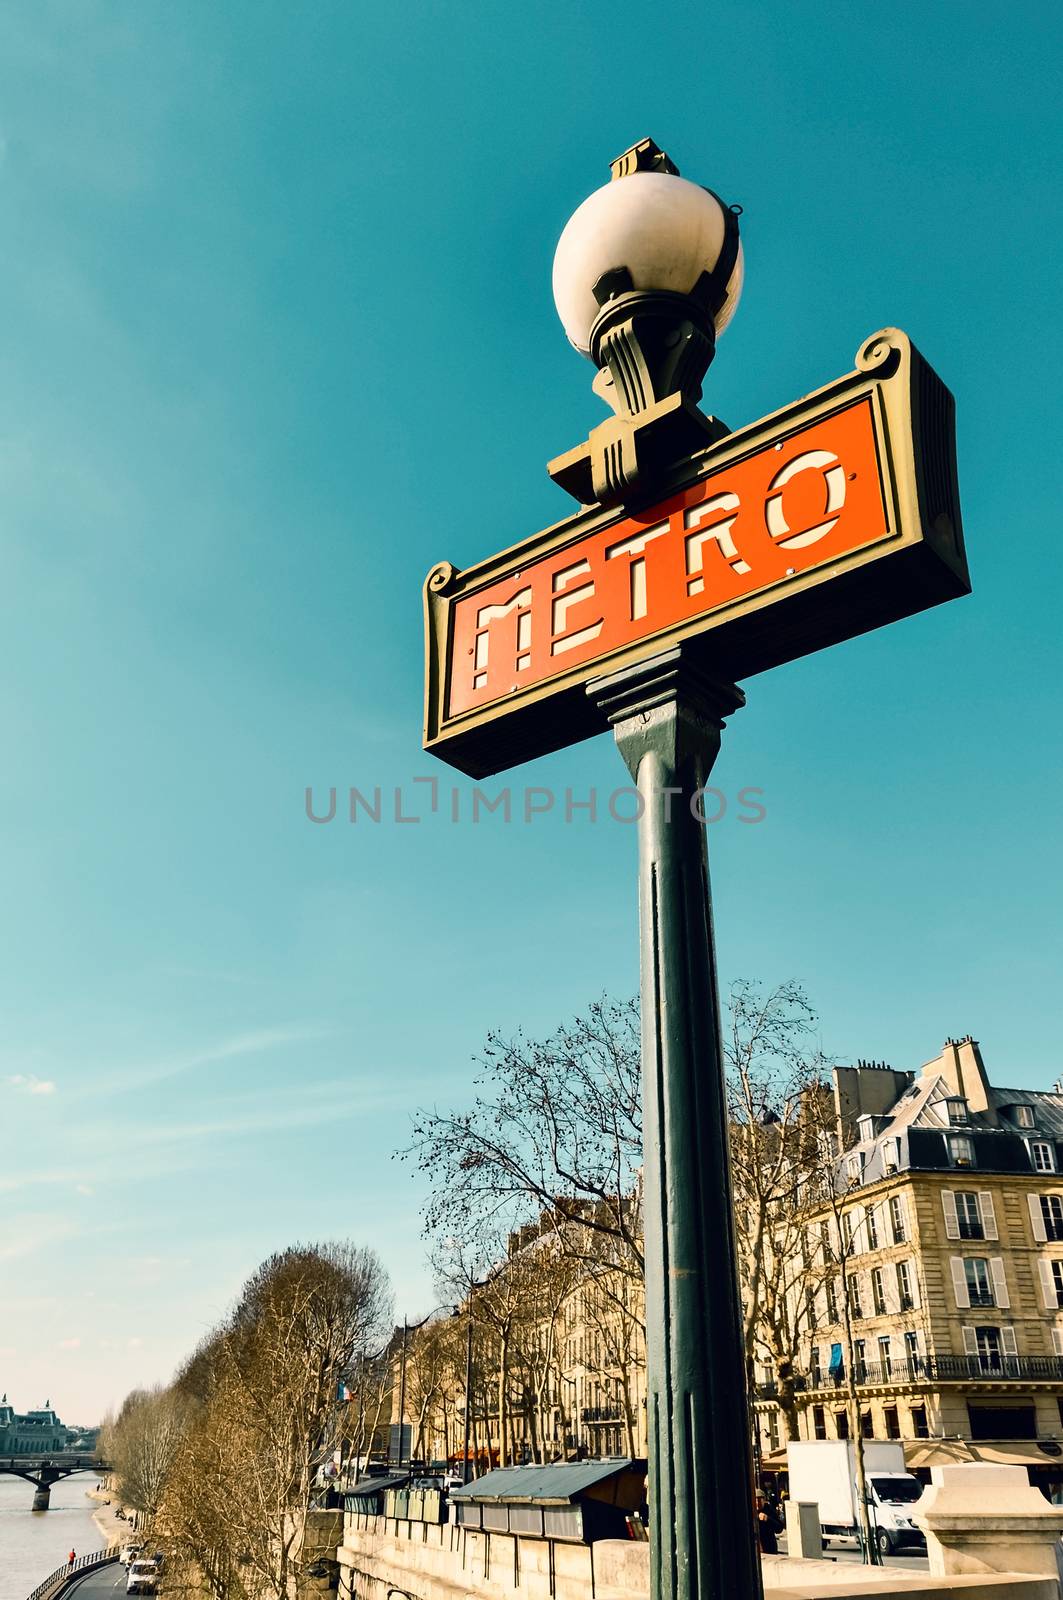 Metro sign in Paris by dutourdumonde